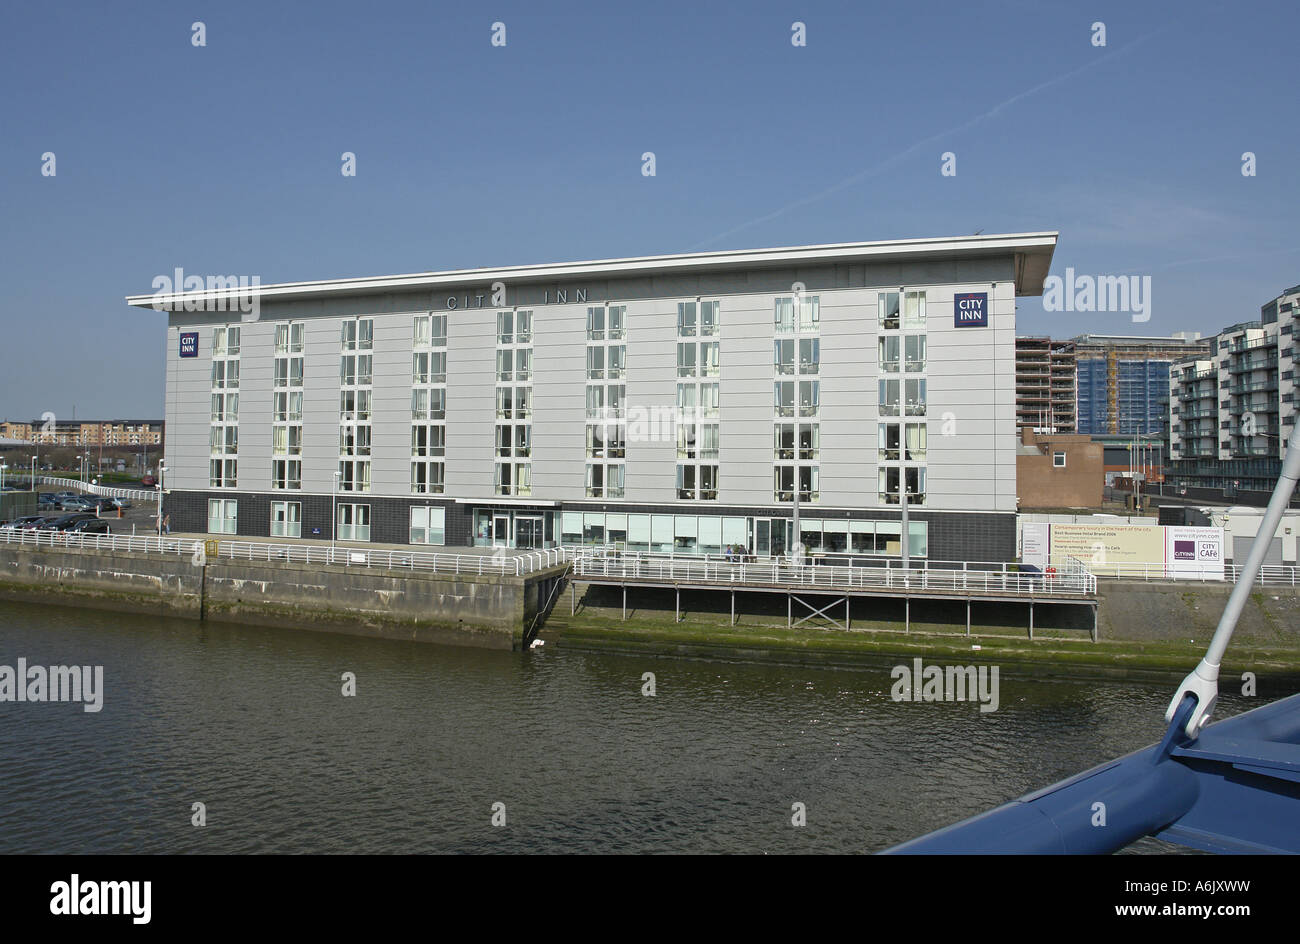 Hotel City Inn (now named Hilton Garden Inn) by the River Clyde at Finnieston Quay in Glasgow Scotland Stock Photo